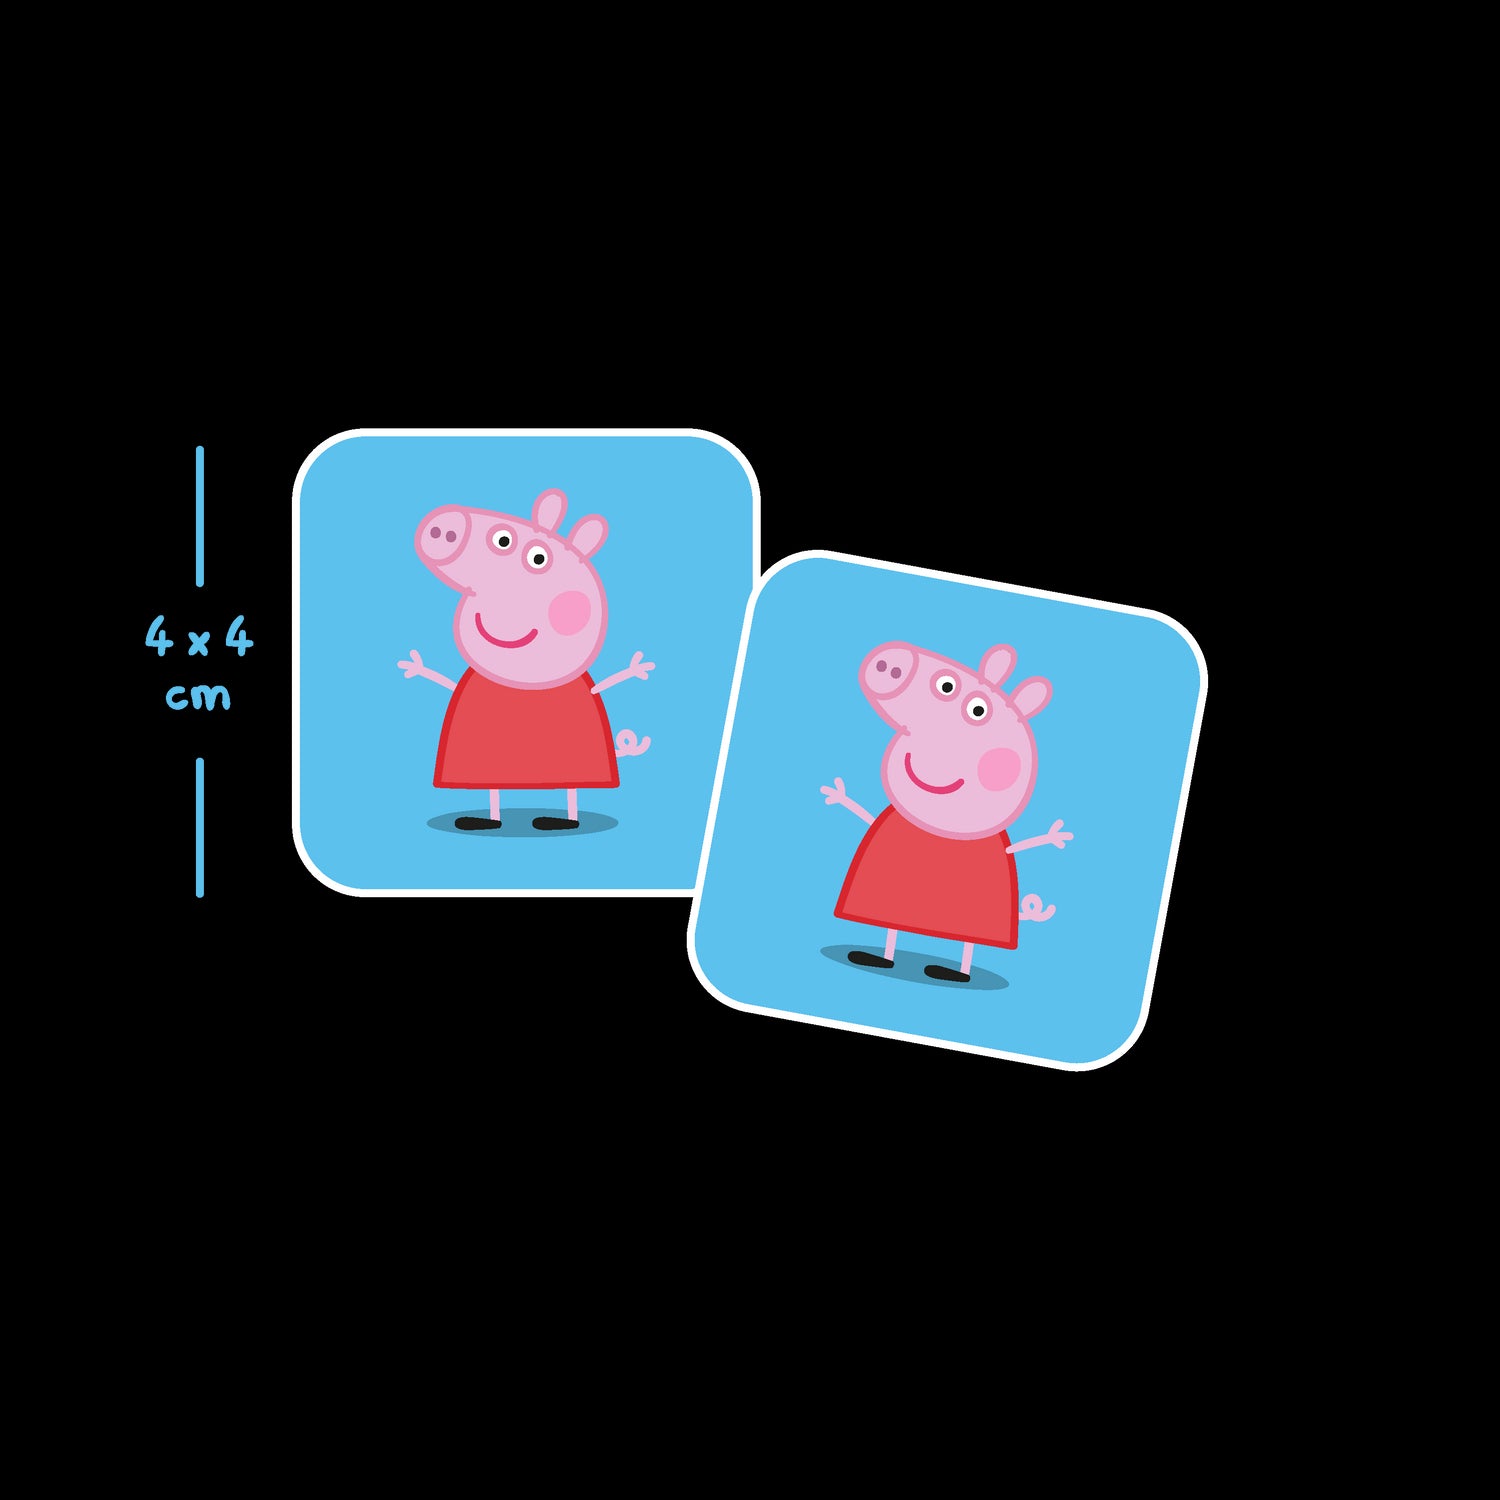 ÖN SİPARİŞ: Peppa Pig Memory Card Game - 28 Kartlı Hafıza ve Eşleştirme Oyunu moritoys 